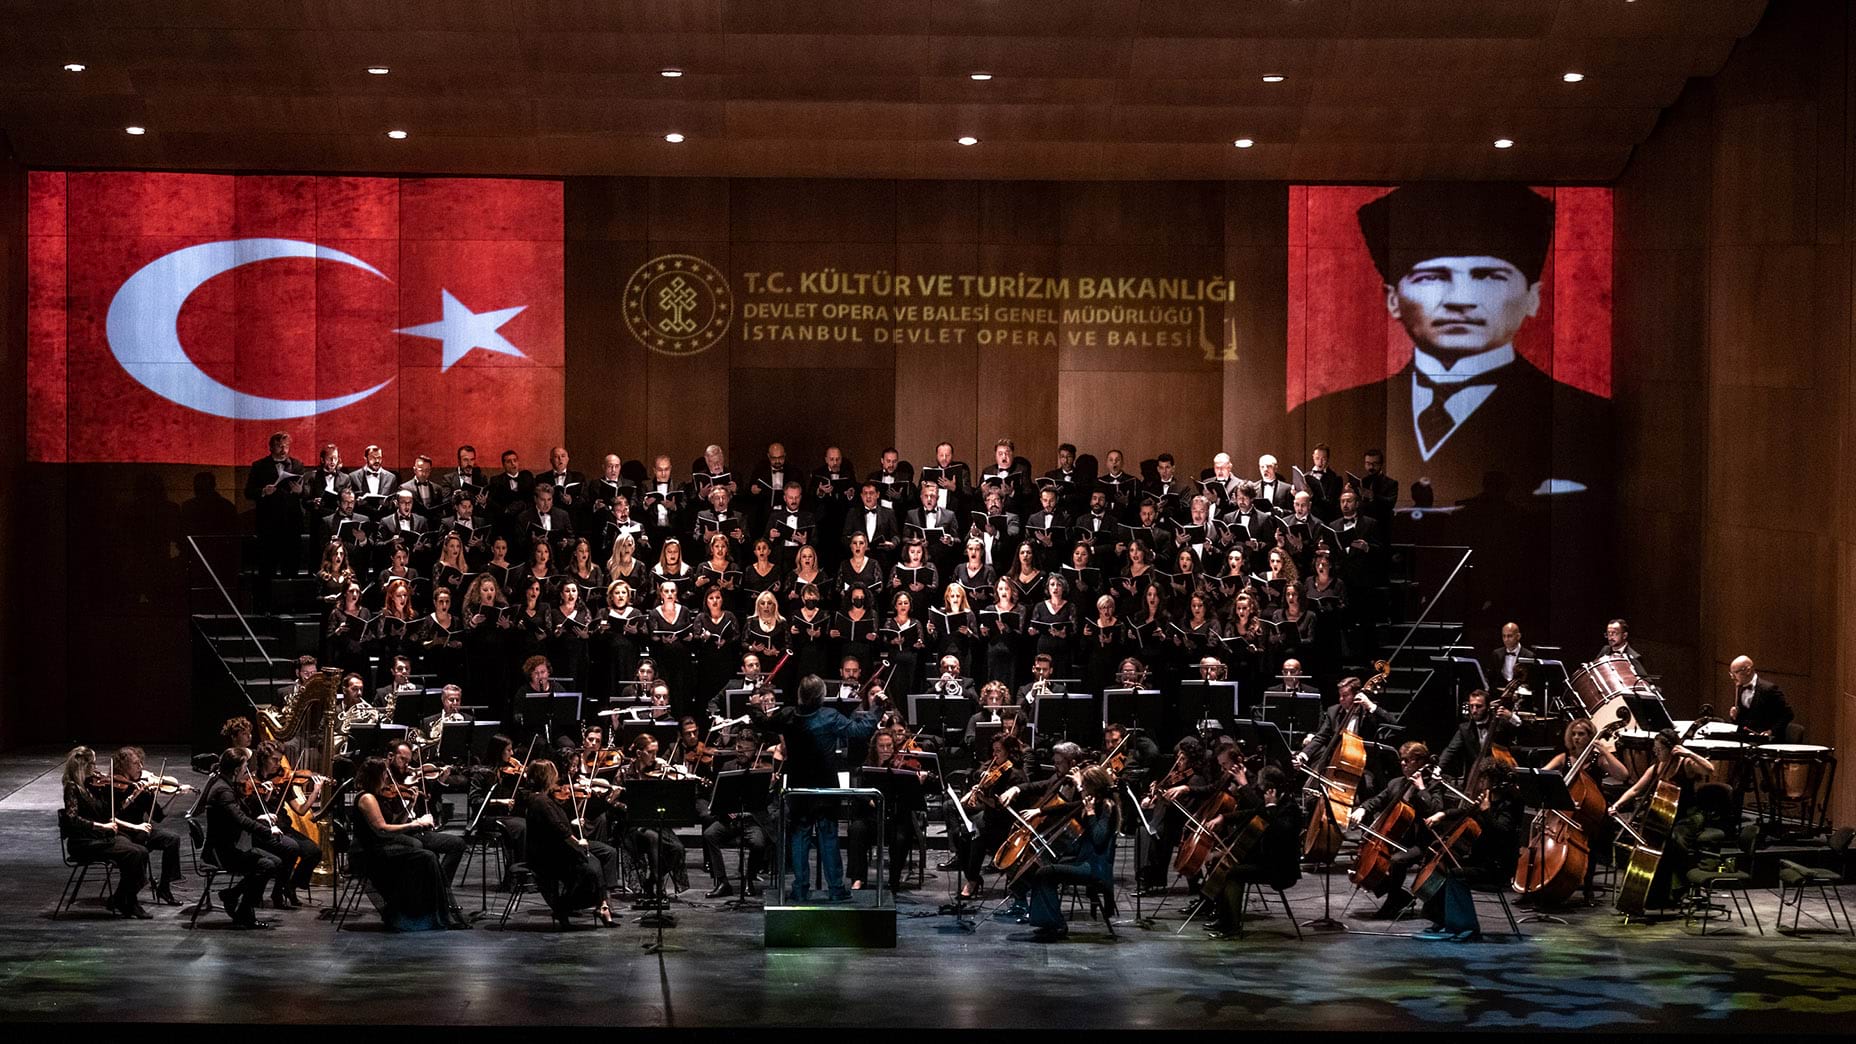 İstanbul Devlet Opera ve Balesi’nden "CUMHURİYET'İN 100.YILI KONSERİ"